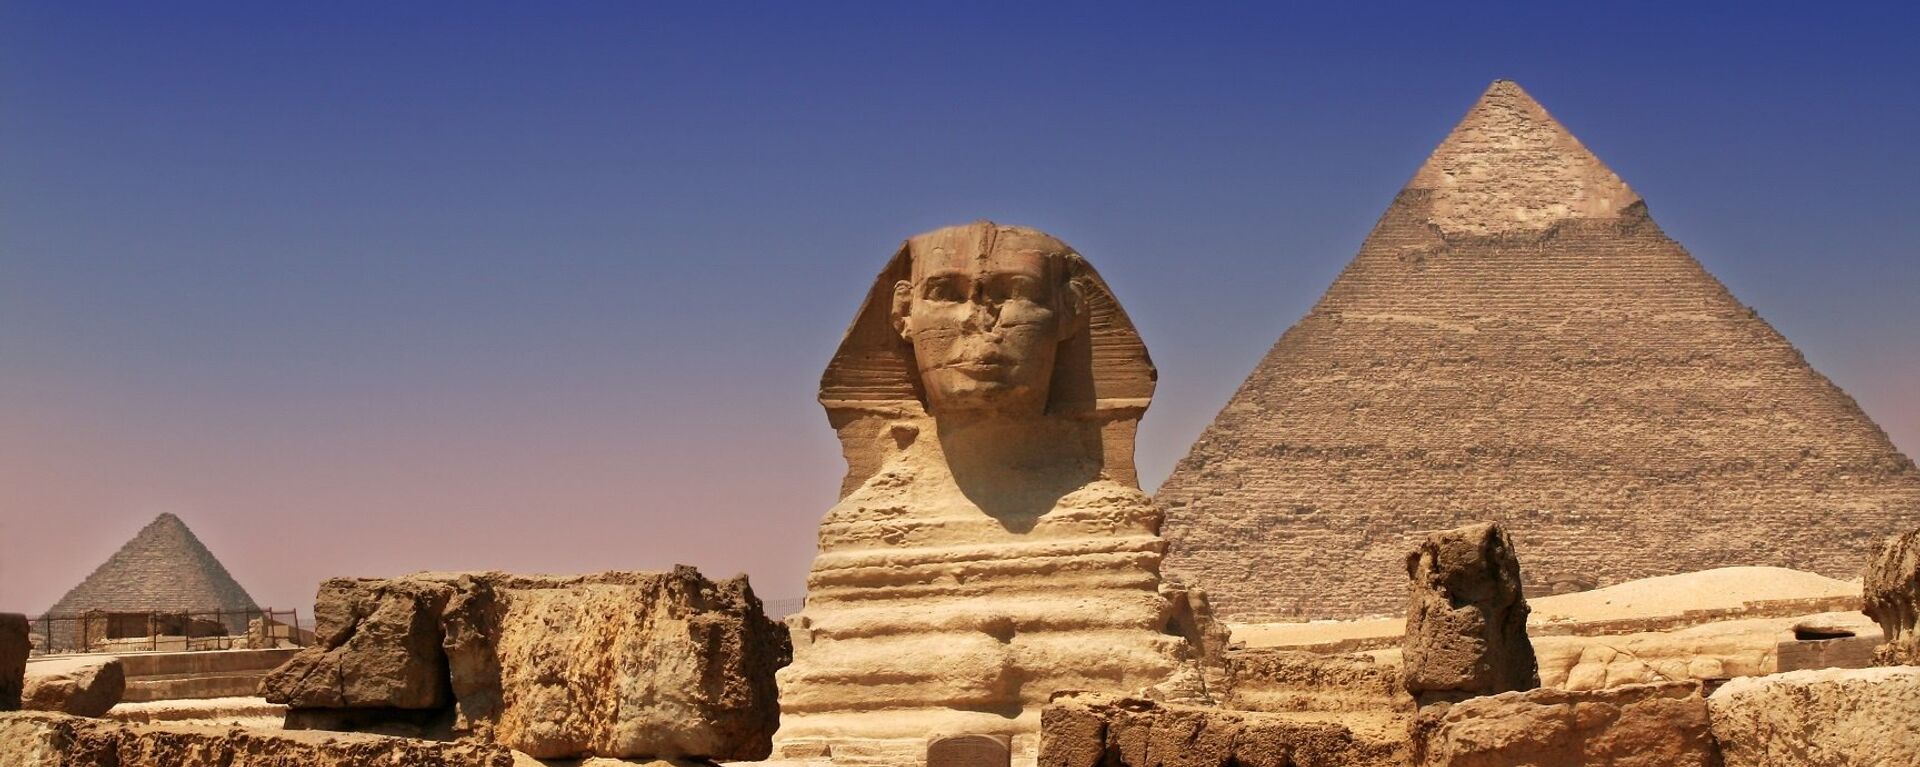 Giza Pyramids & Sphinx - Egypt - Sputnik International, 1920, 05.10.2019